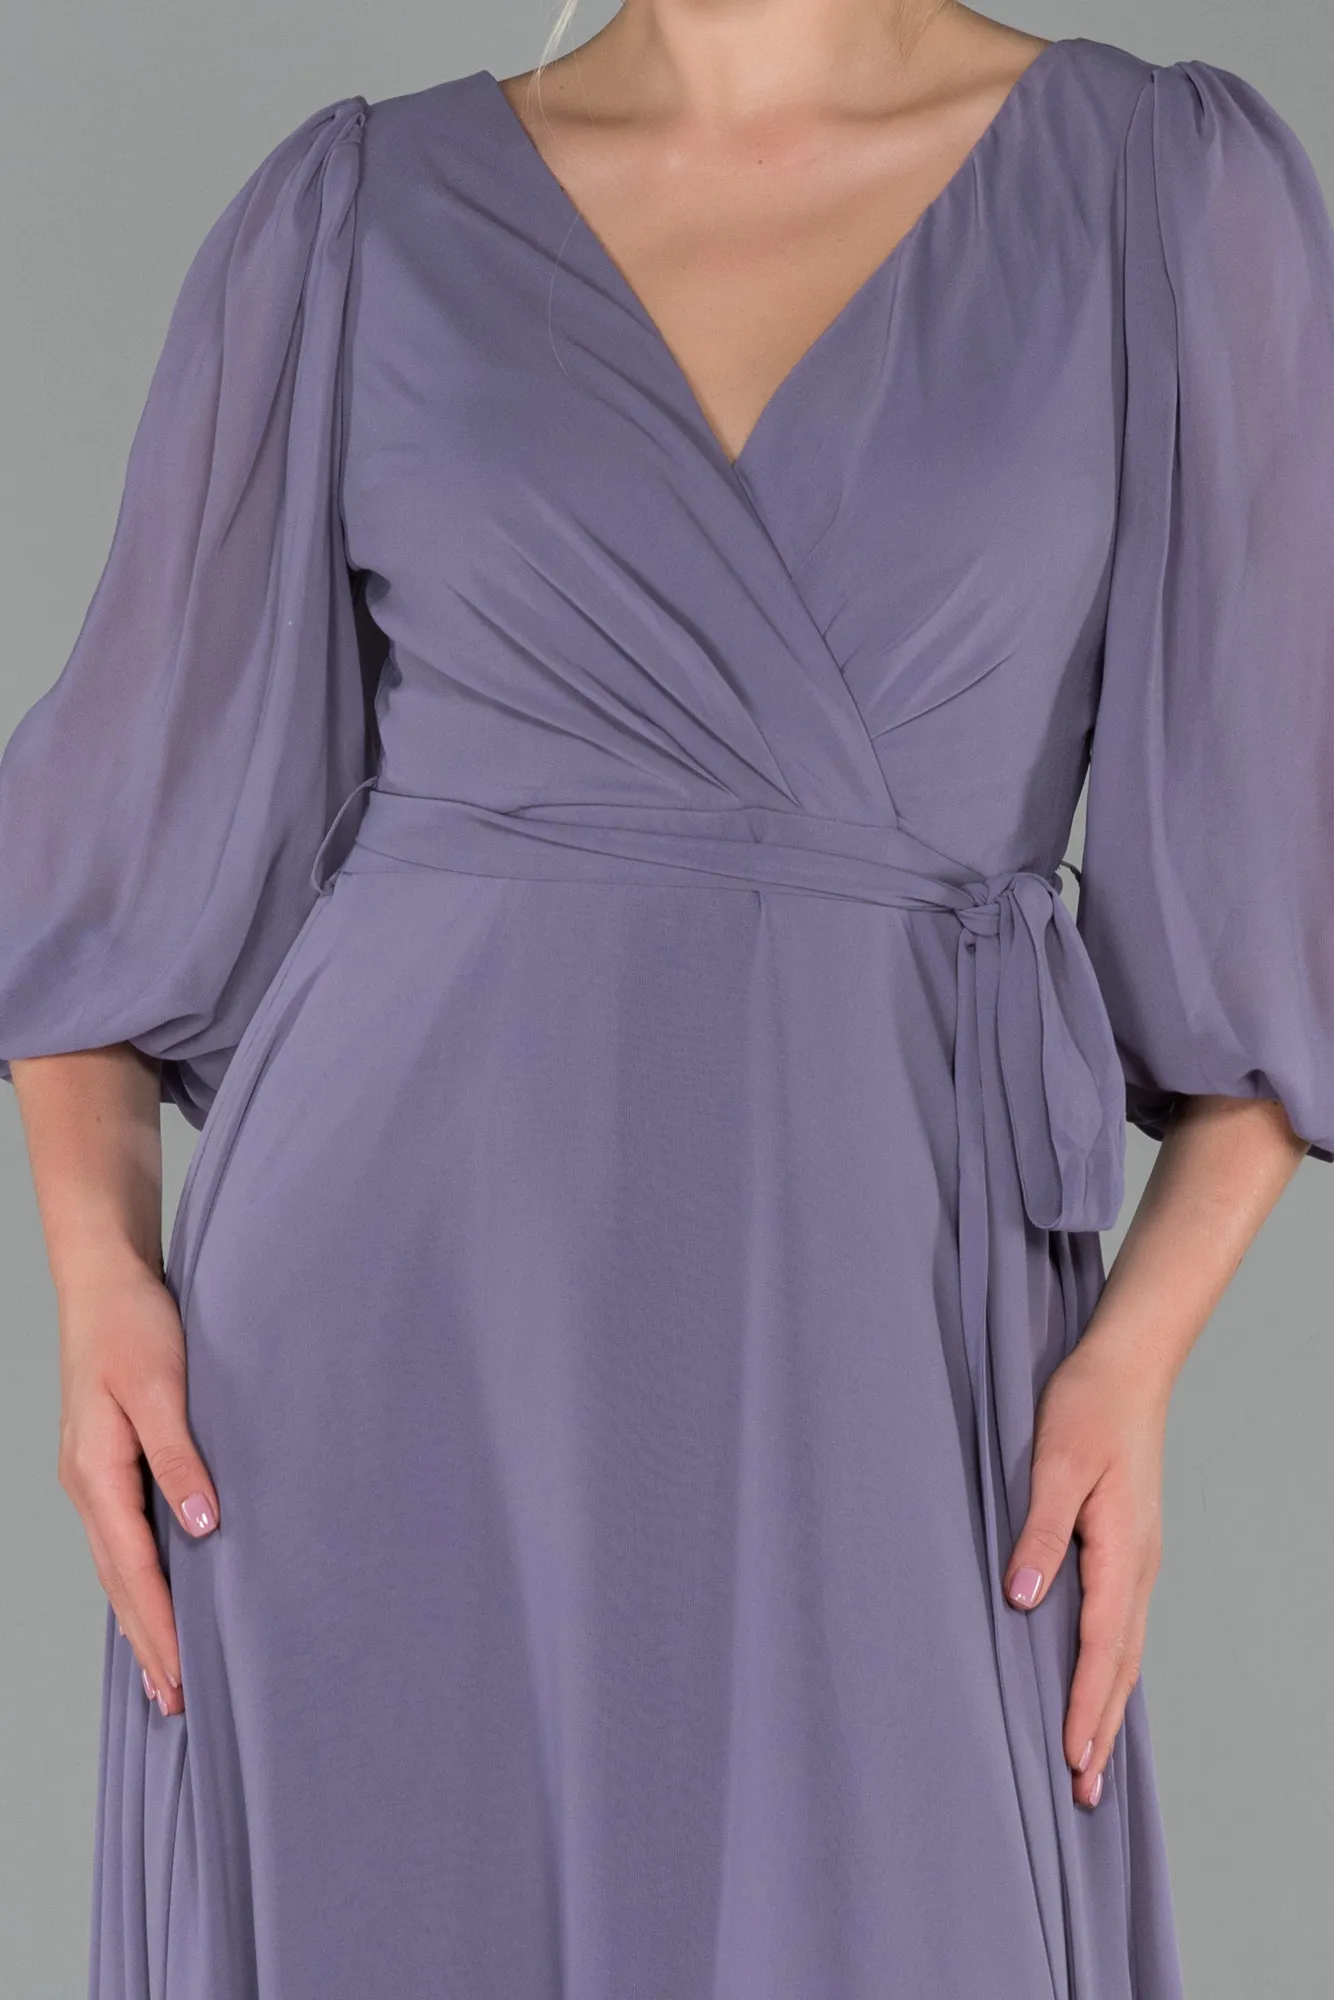 Lavender-Long Chiffon Invitation Dress ABU1729